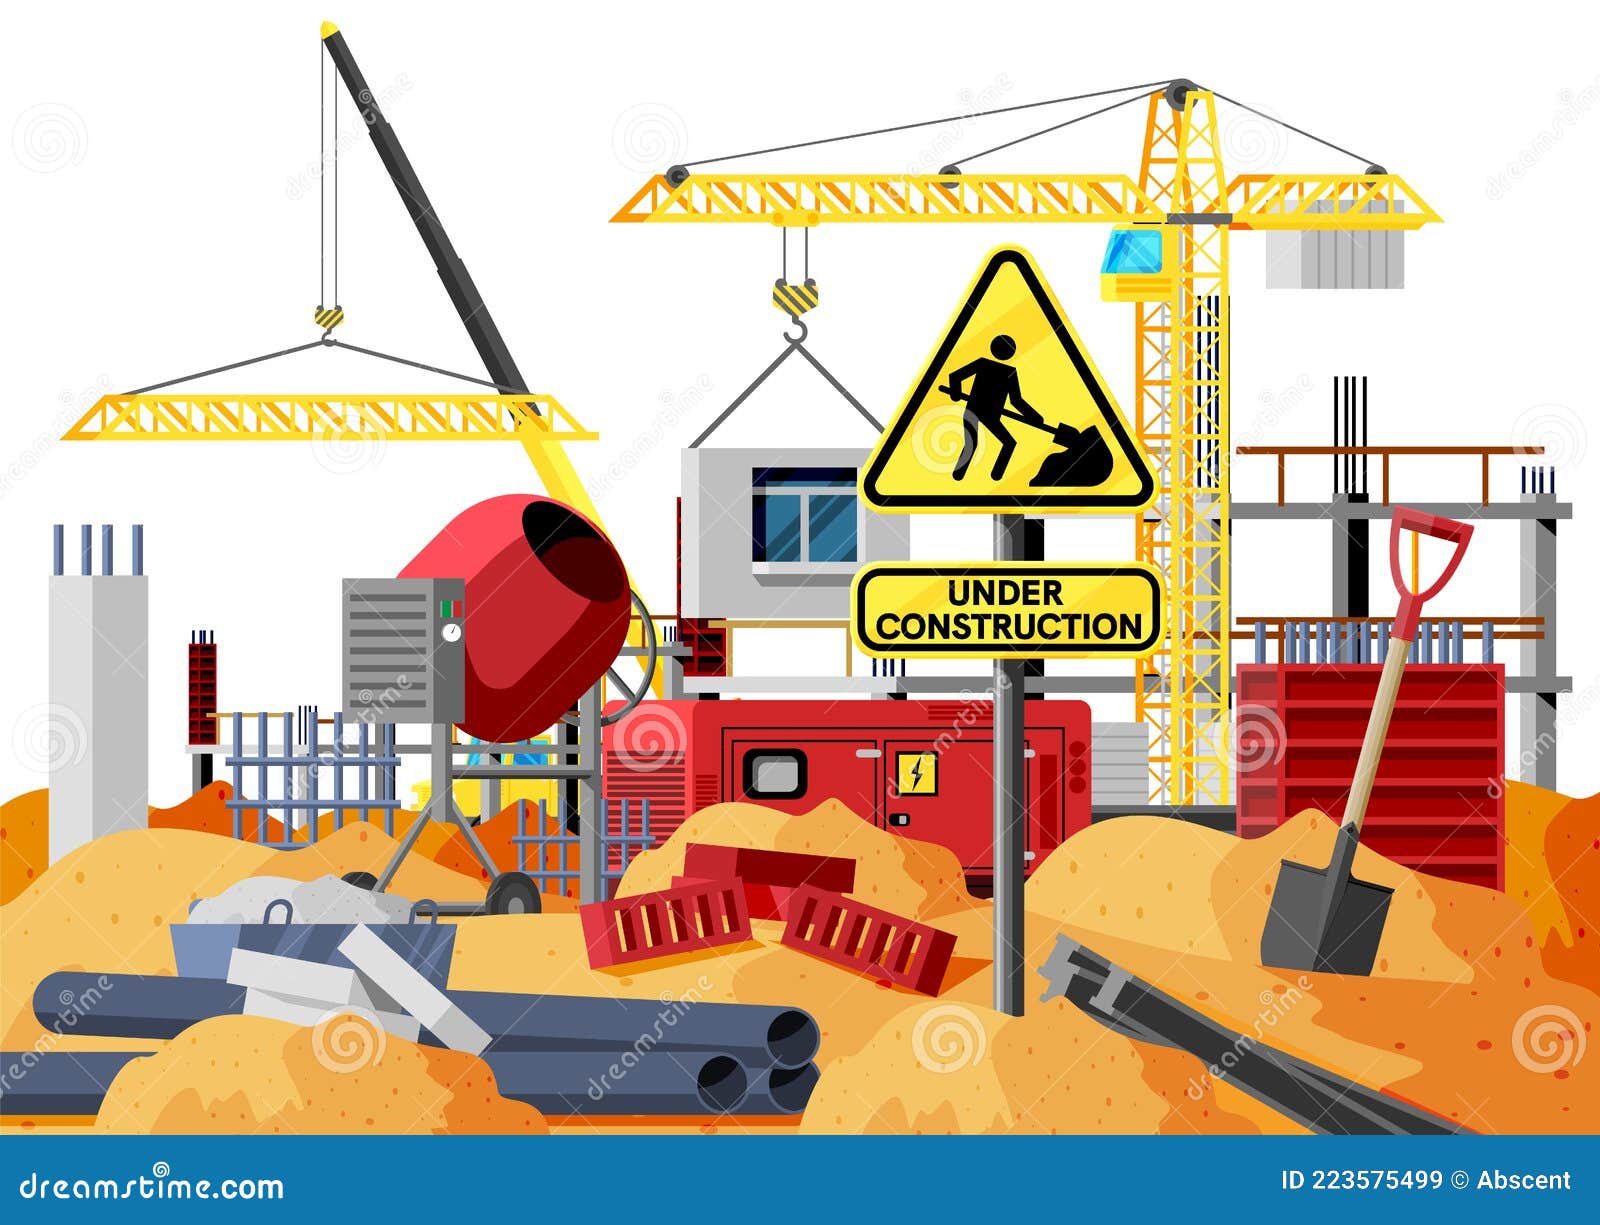 Construction Site Banner stock vector. Illustration of shovel - 223575499